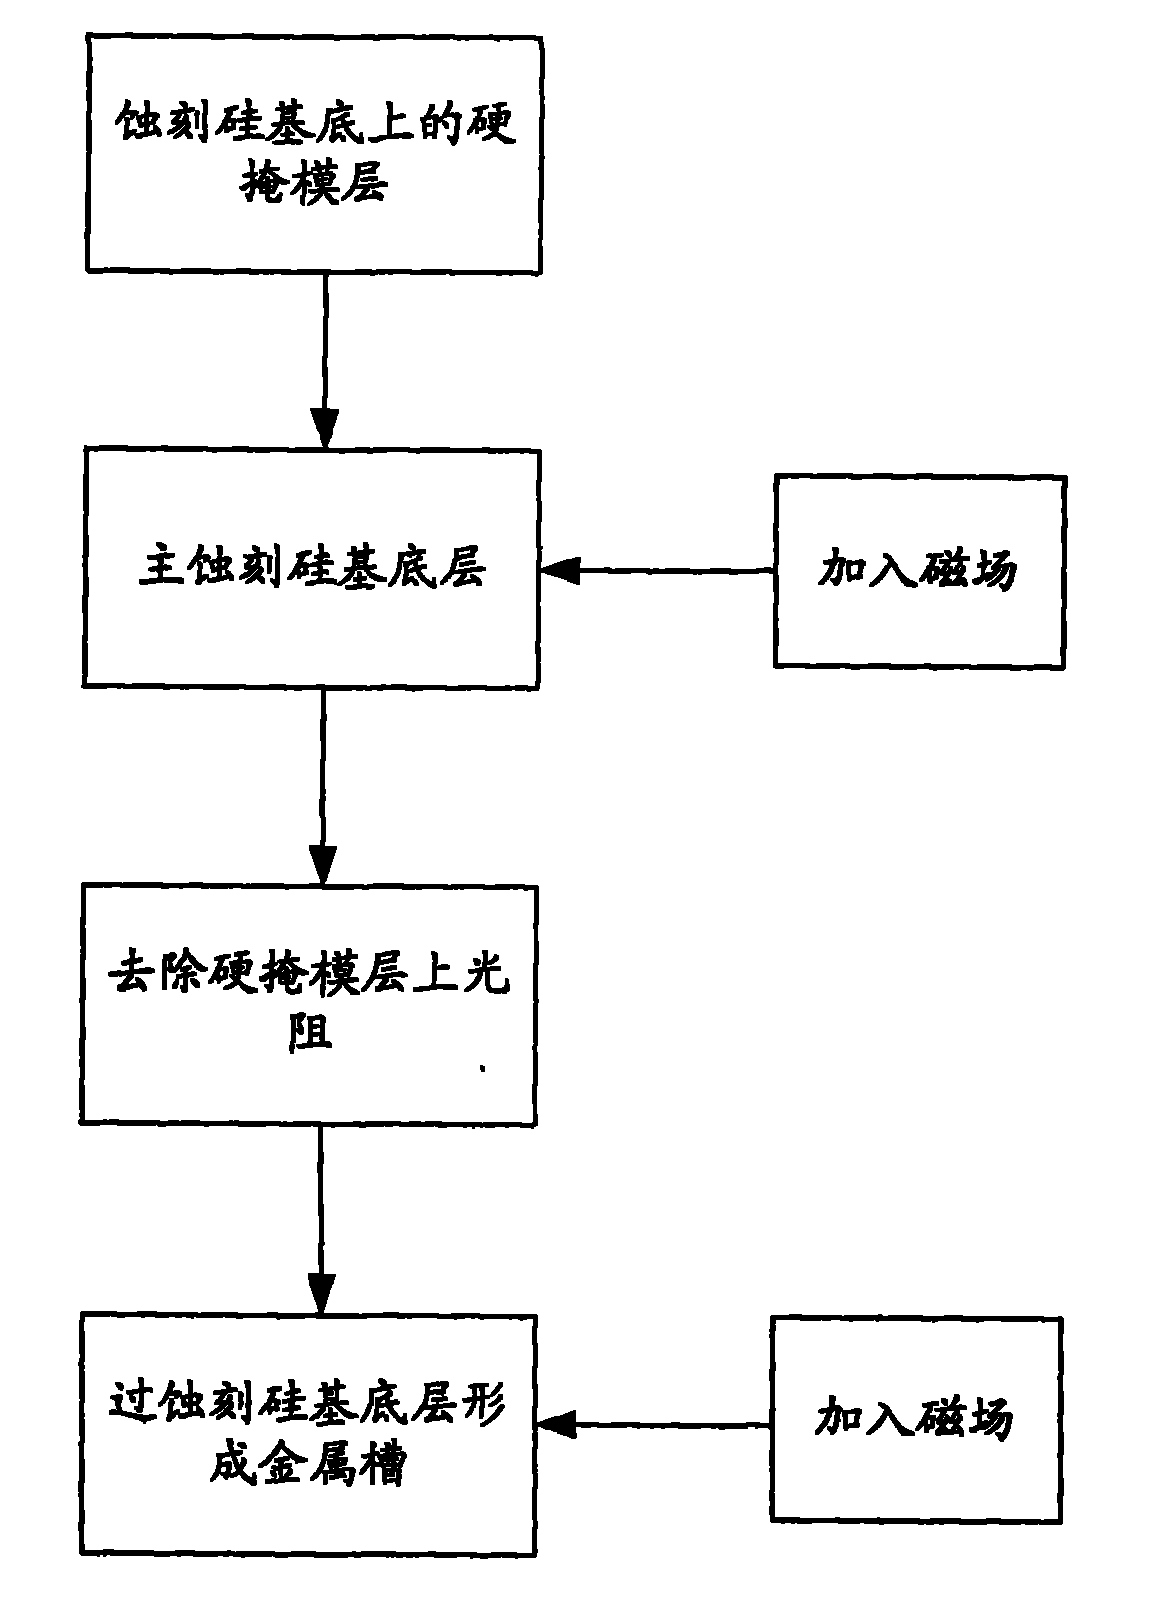 Method for producing metallic channel